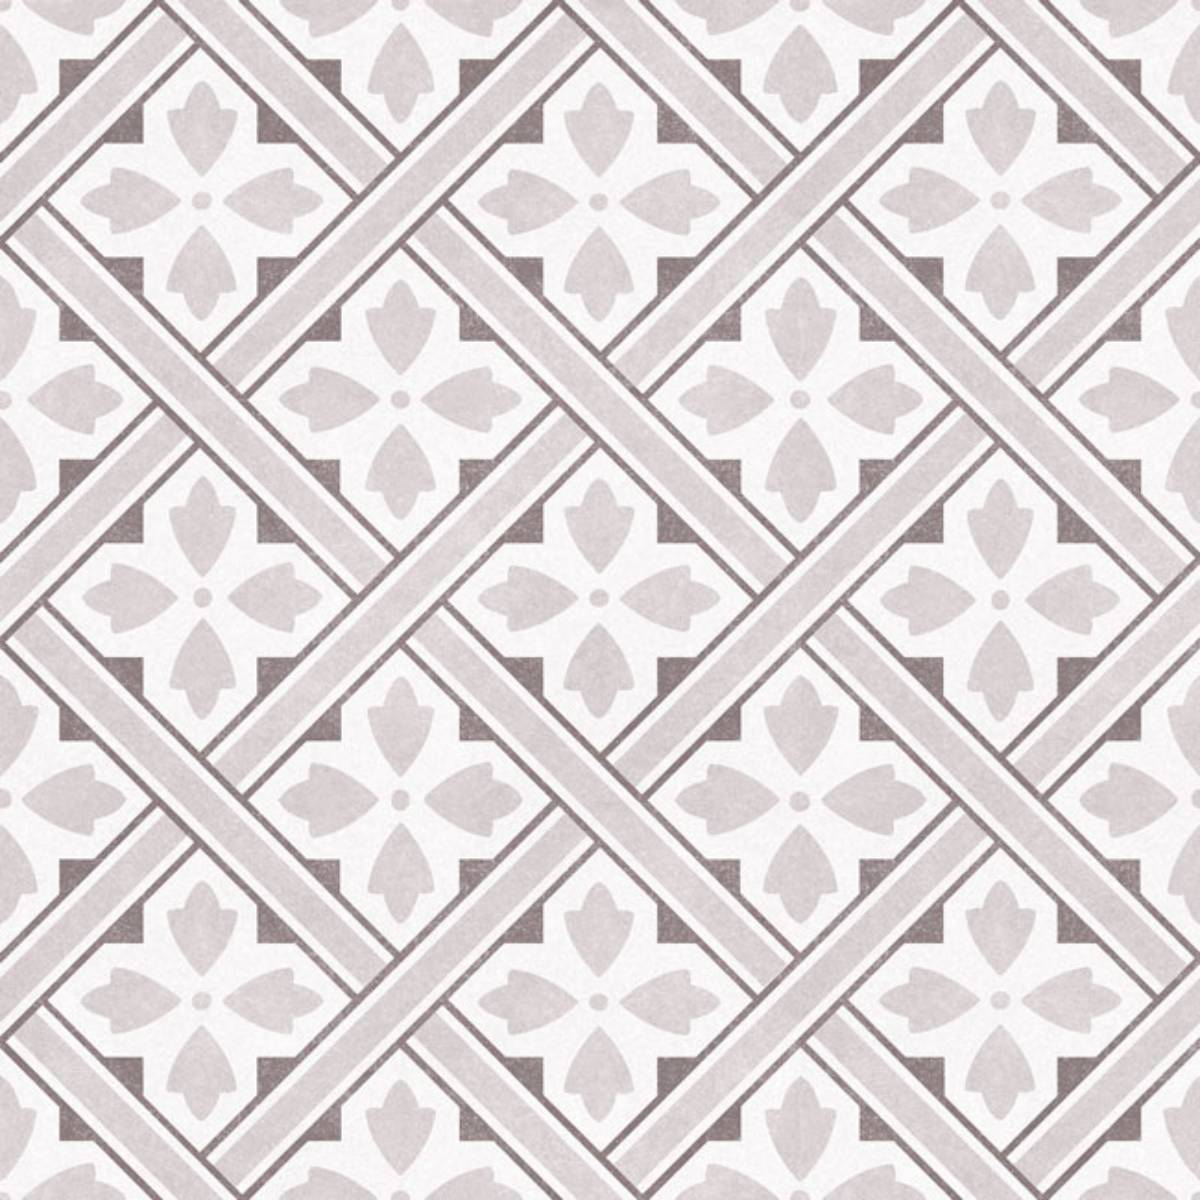 Alhambra 45 x 45cm Pattern Tile - 1.62sqm perbox (12121)